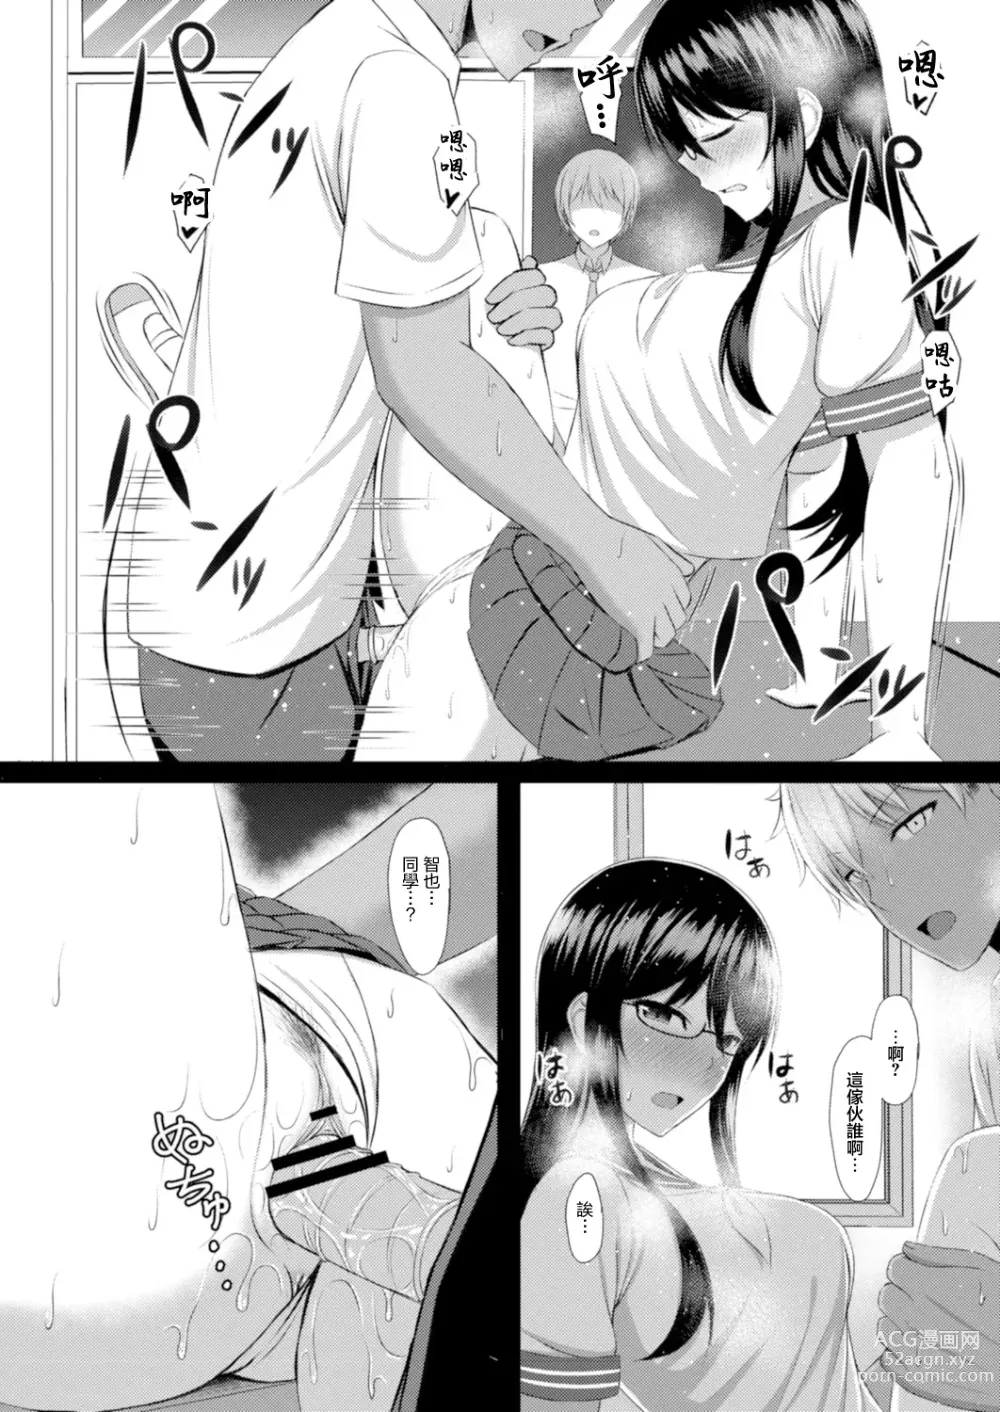 Page 6 of manga SECRET ROOM